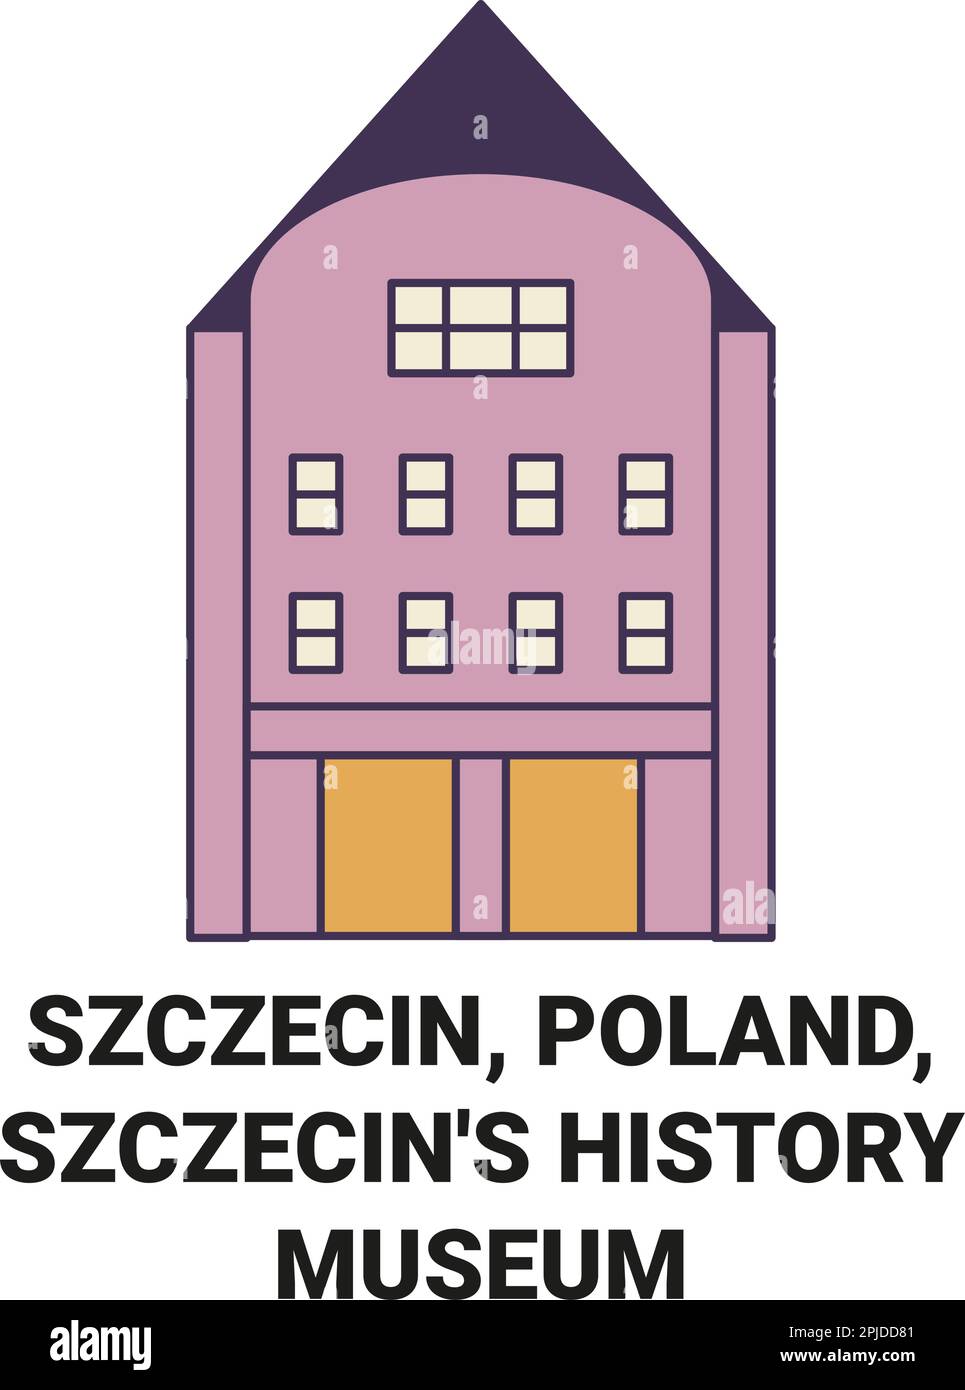 Poland, Szczecin, Szczecin's History Museum travel landmark vector illustration Stock Vector